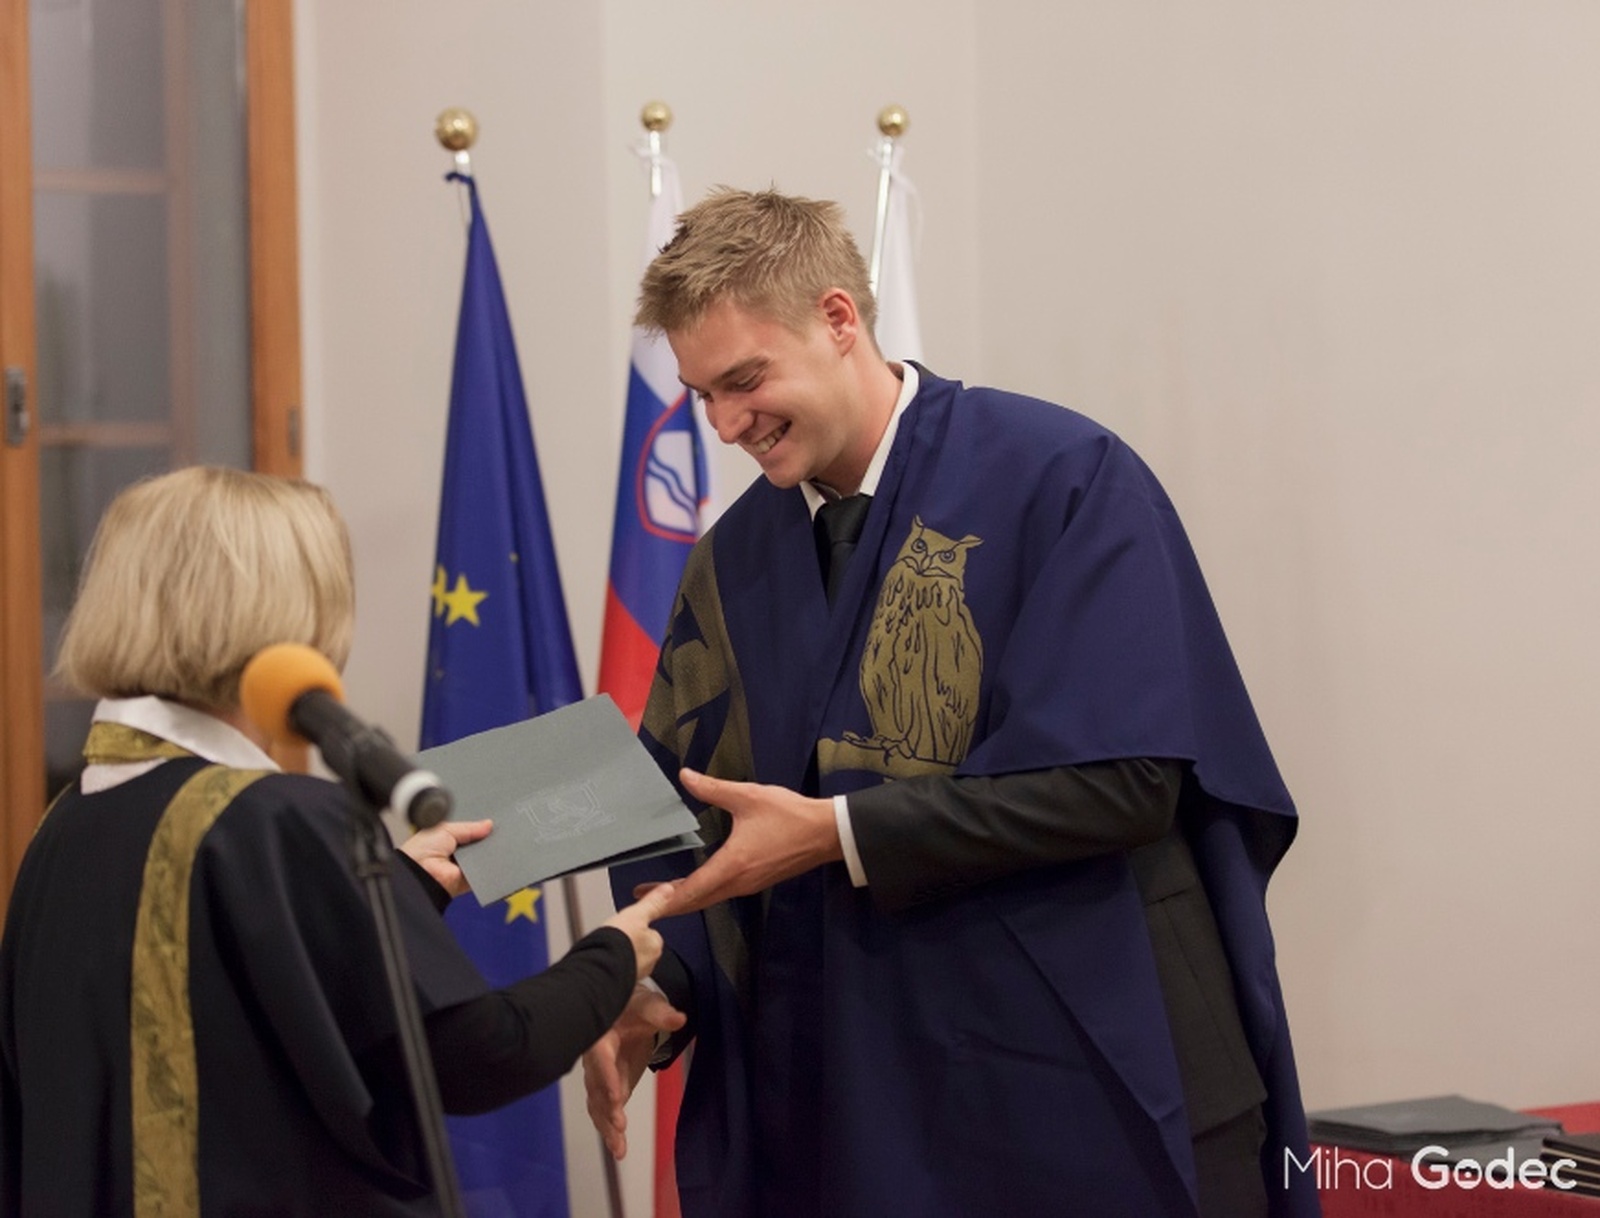 The 1000th Diploma Awarded at the University of Nova Gorica